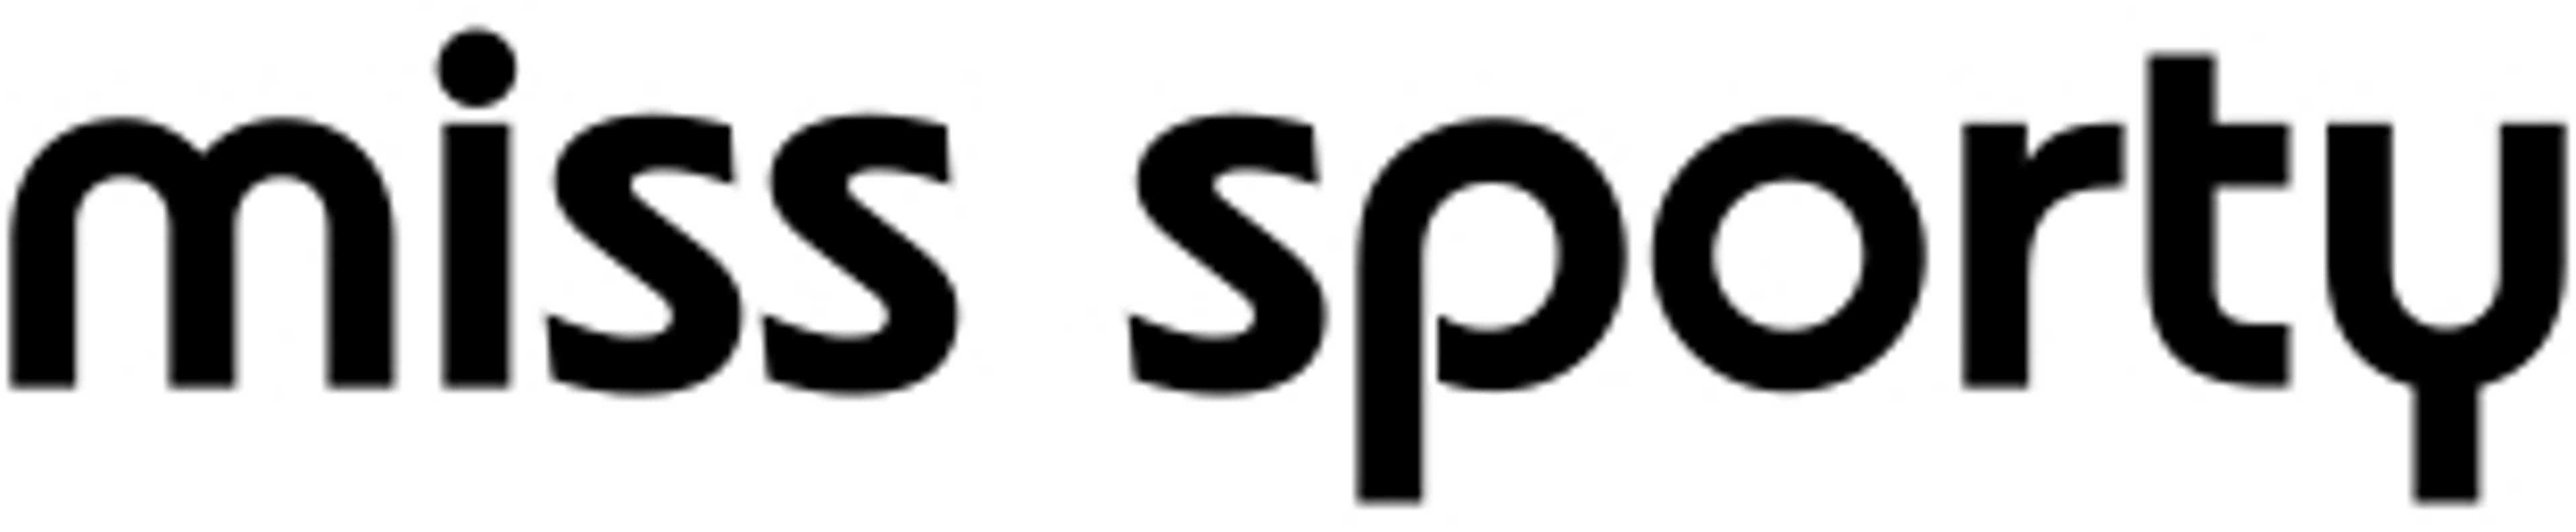 miss-sporty-logo.jpg